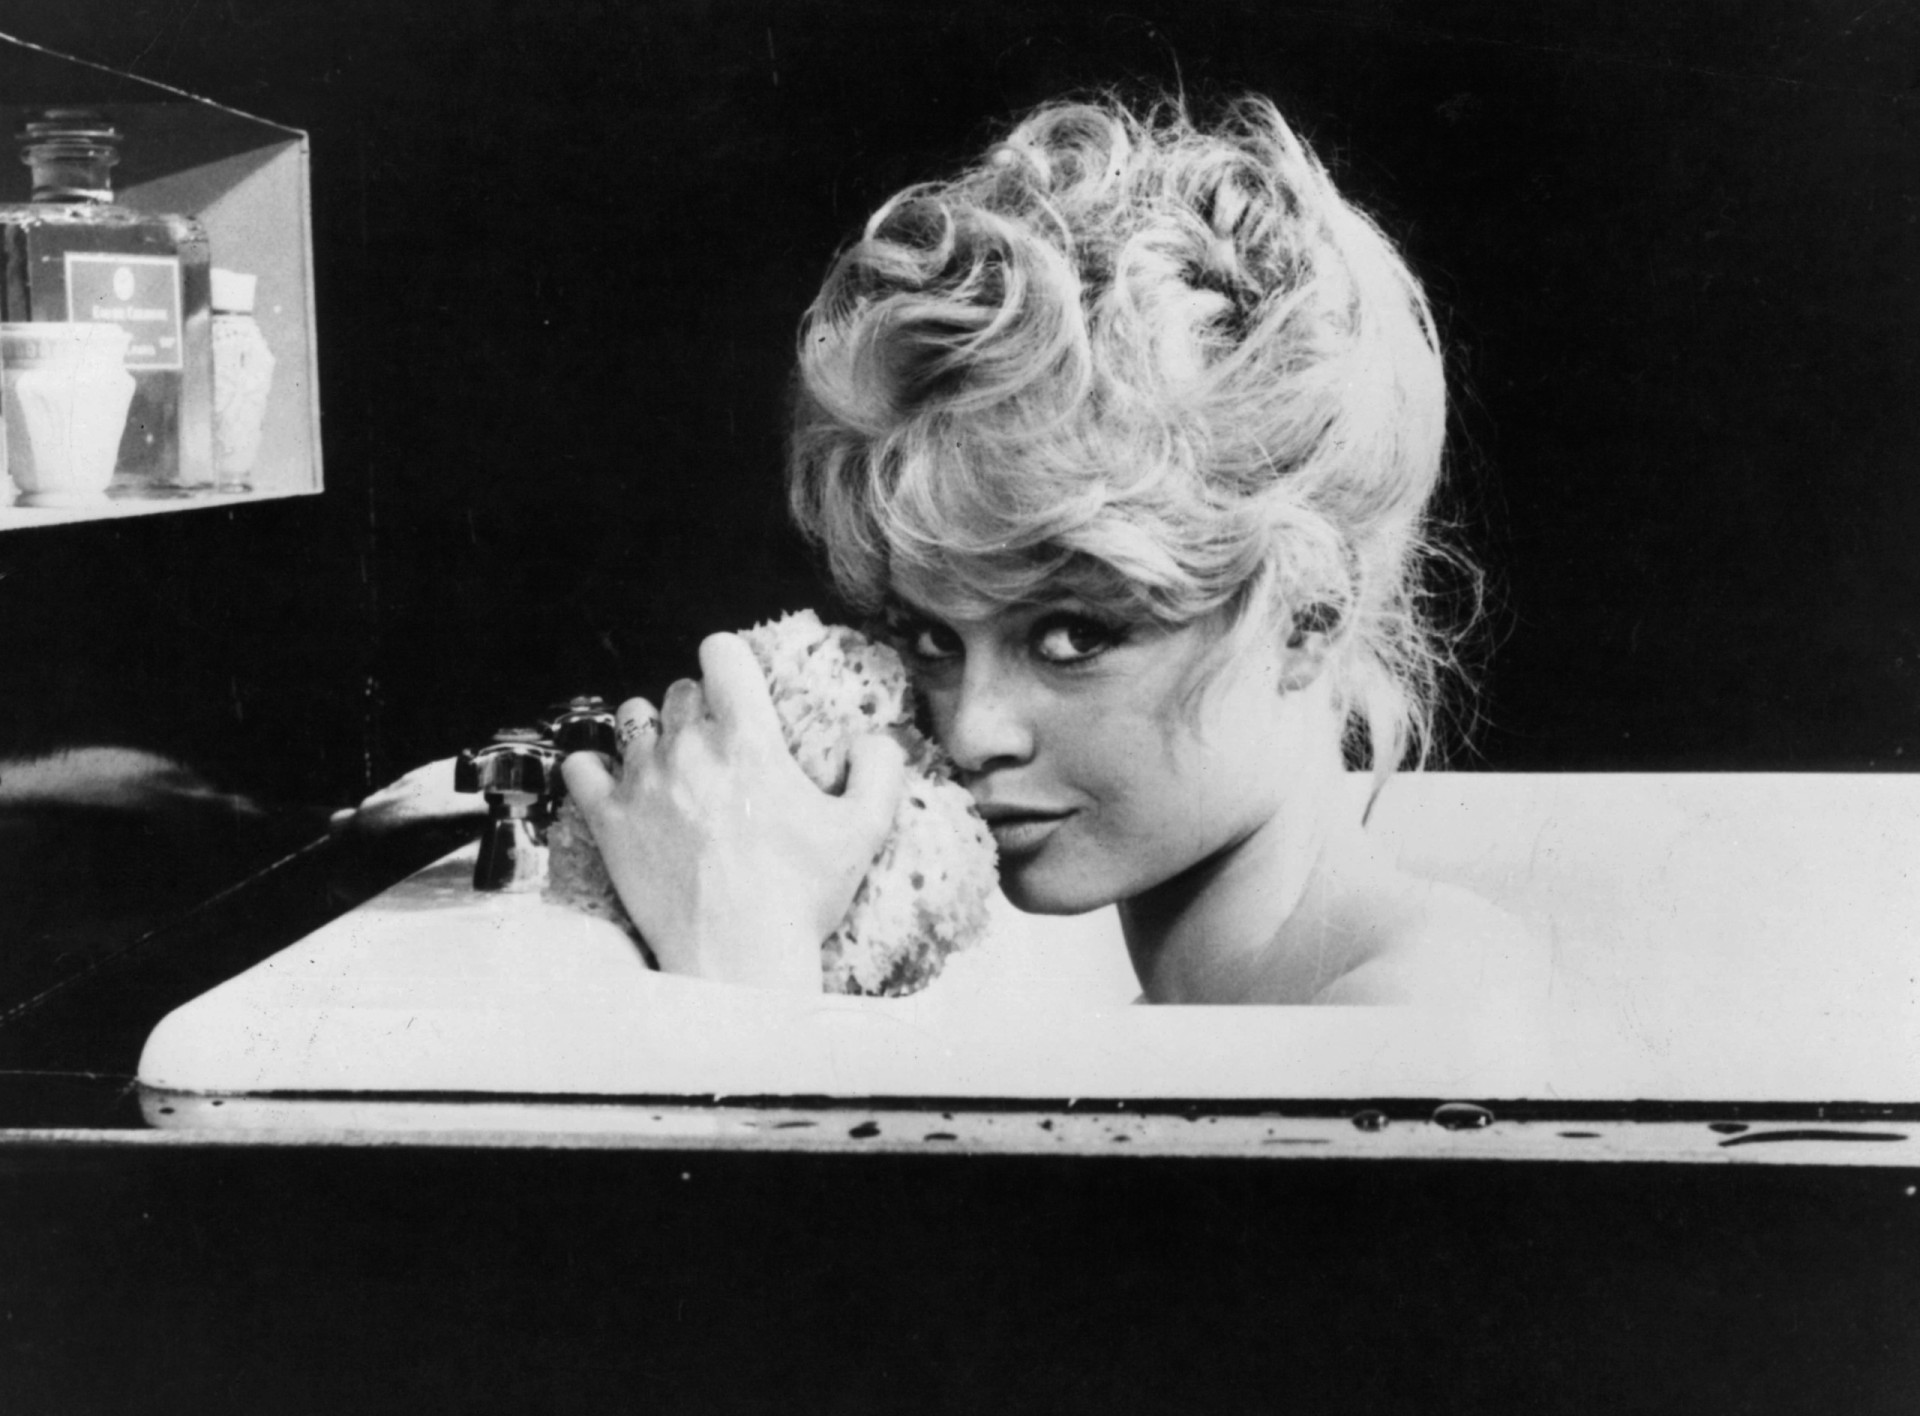 <p>Brigitte Bardot strikes a provocative bathtub pose in a scene from the French film 'La Parisienne.'</p><p>You may also like:<a href="https://www.starsinsider.com/n/350390?utm_source=msn.com&utm_medium=display&utm_campaign=referral_description&utm_content=546036en-en"> Stars who sued for defamation </a></p>